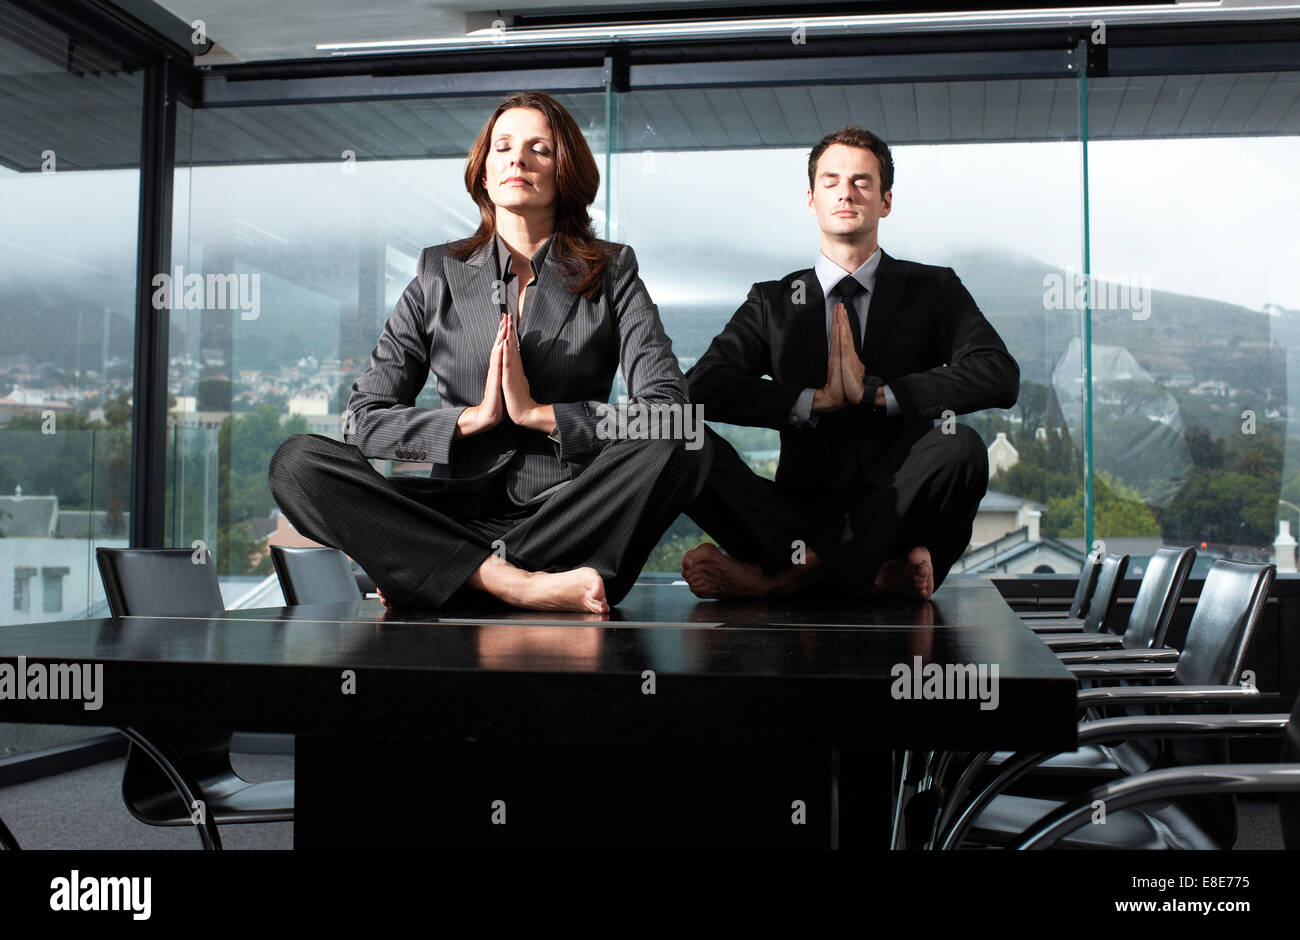 Съемка без согласия человека. Медитация в офисе. Мужчина медитирует в офисе. Бизнес медитация. Спокойствие в офисе.